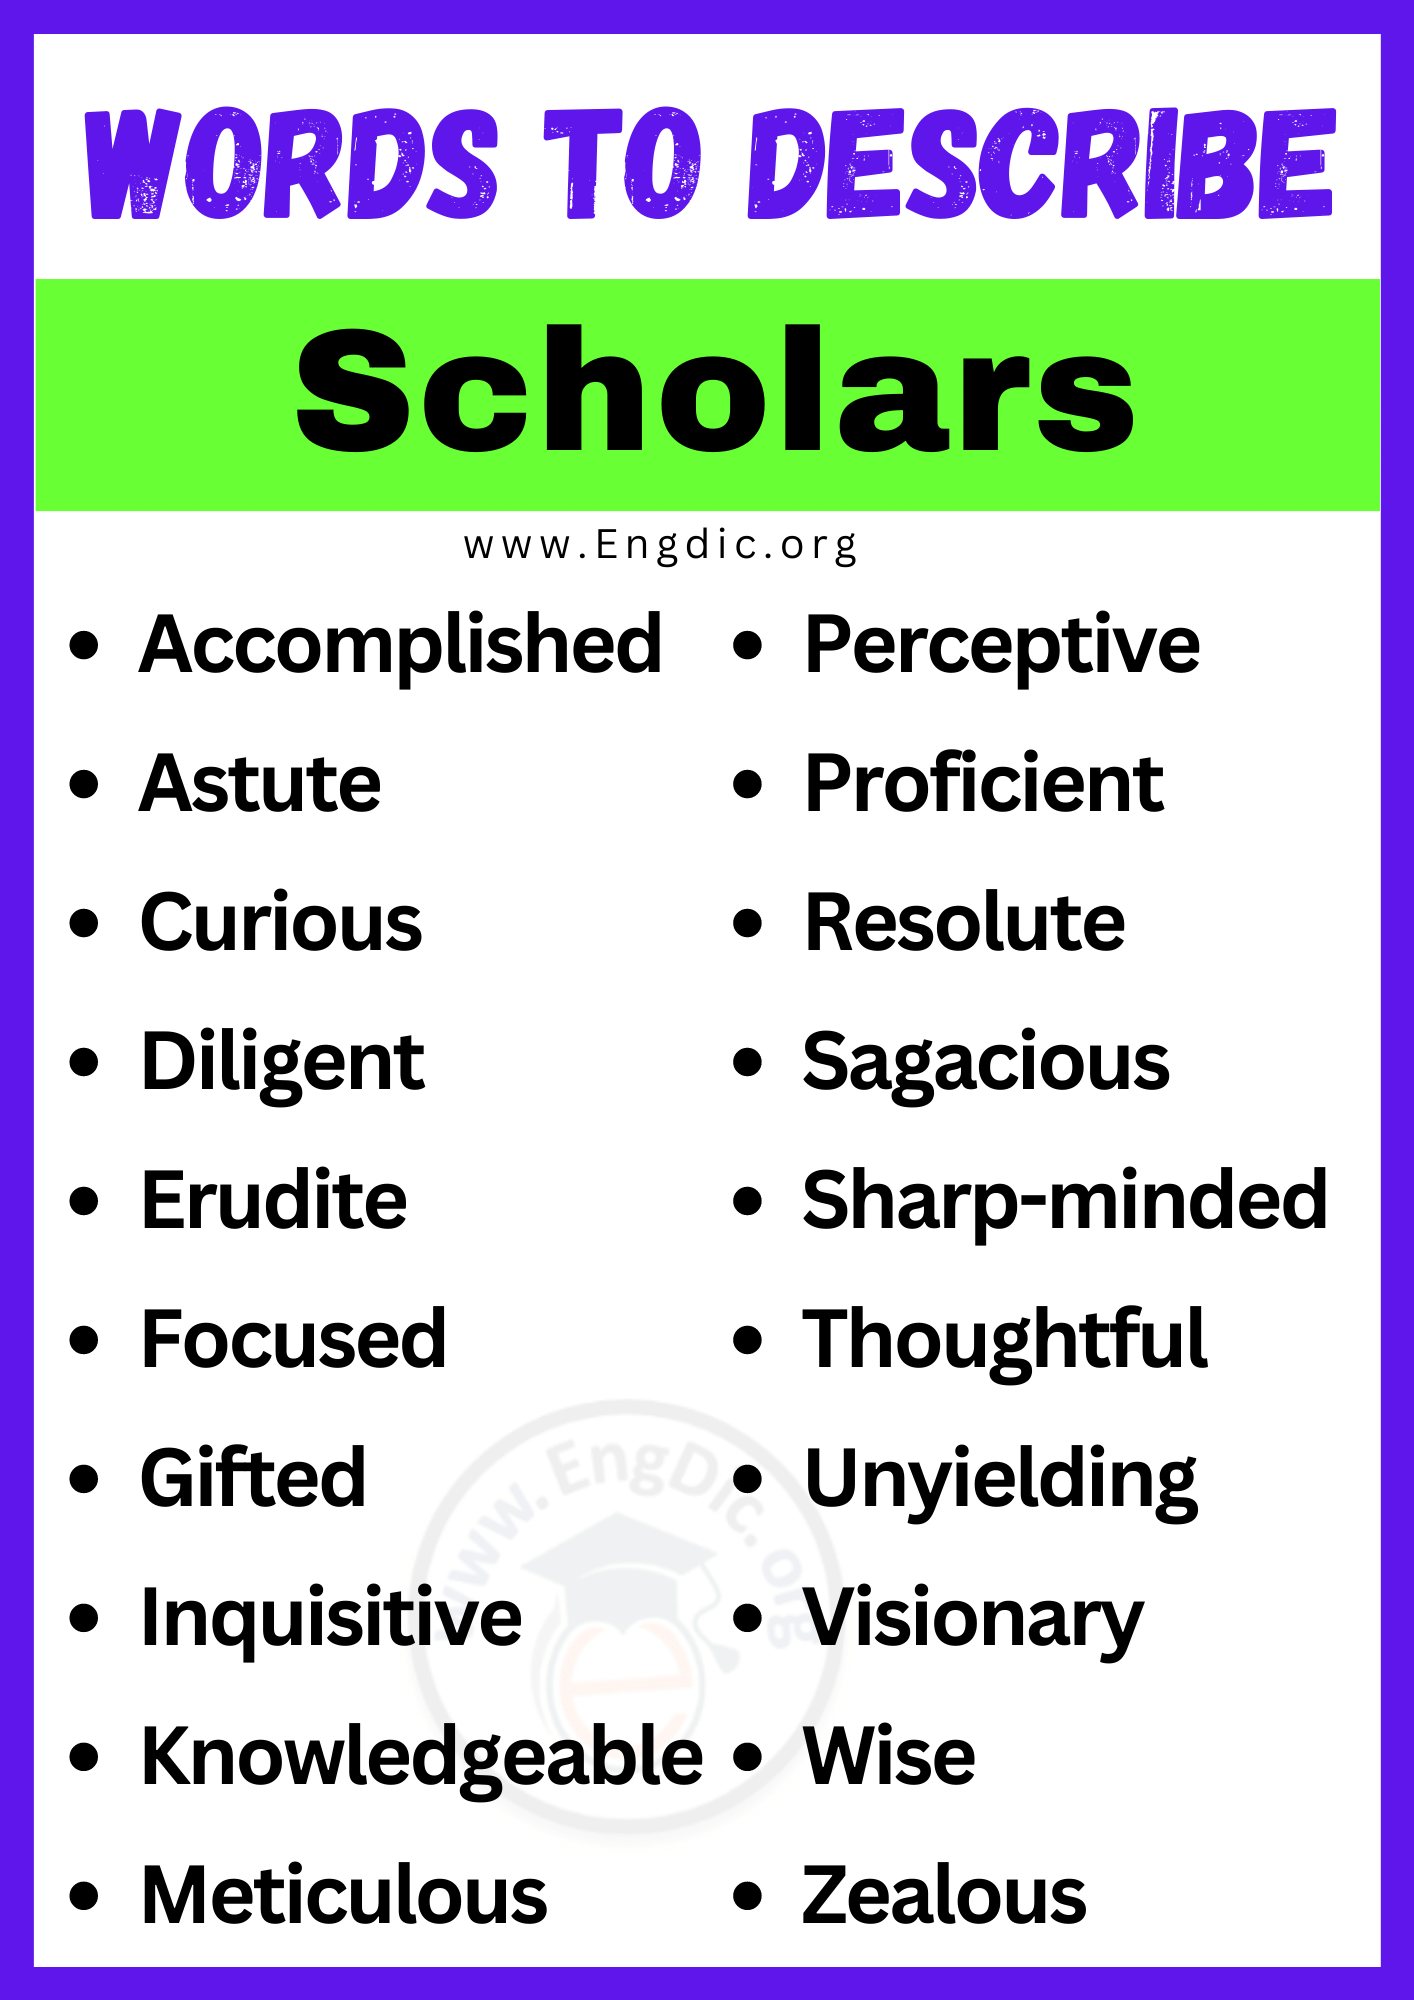 Words to Describe Scholars